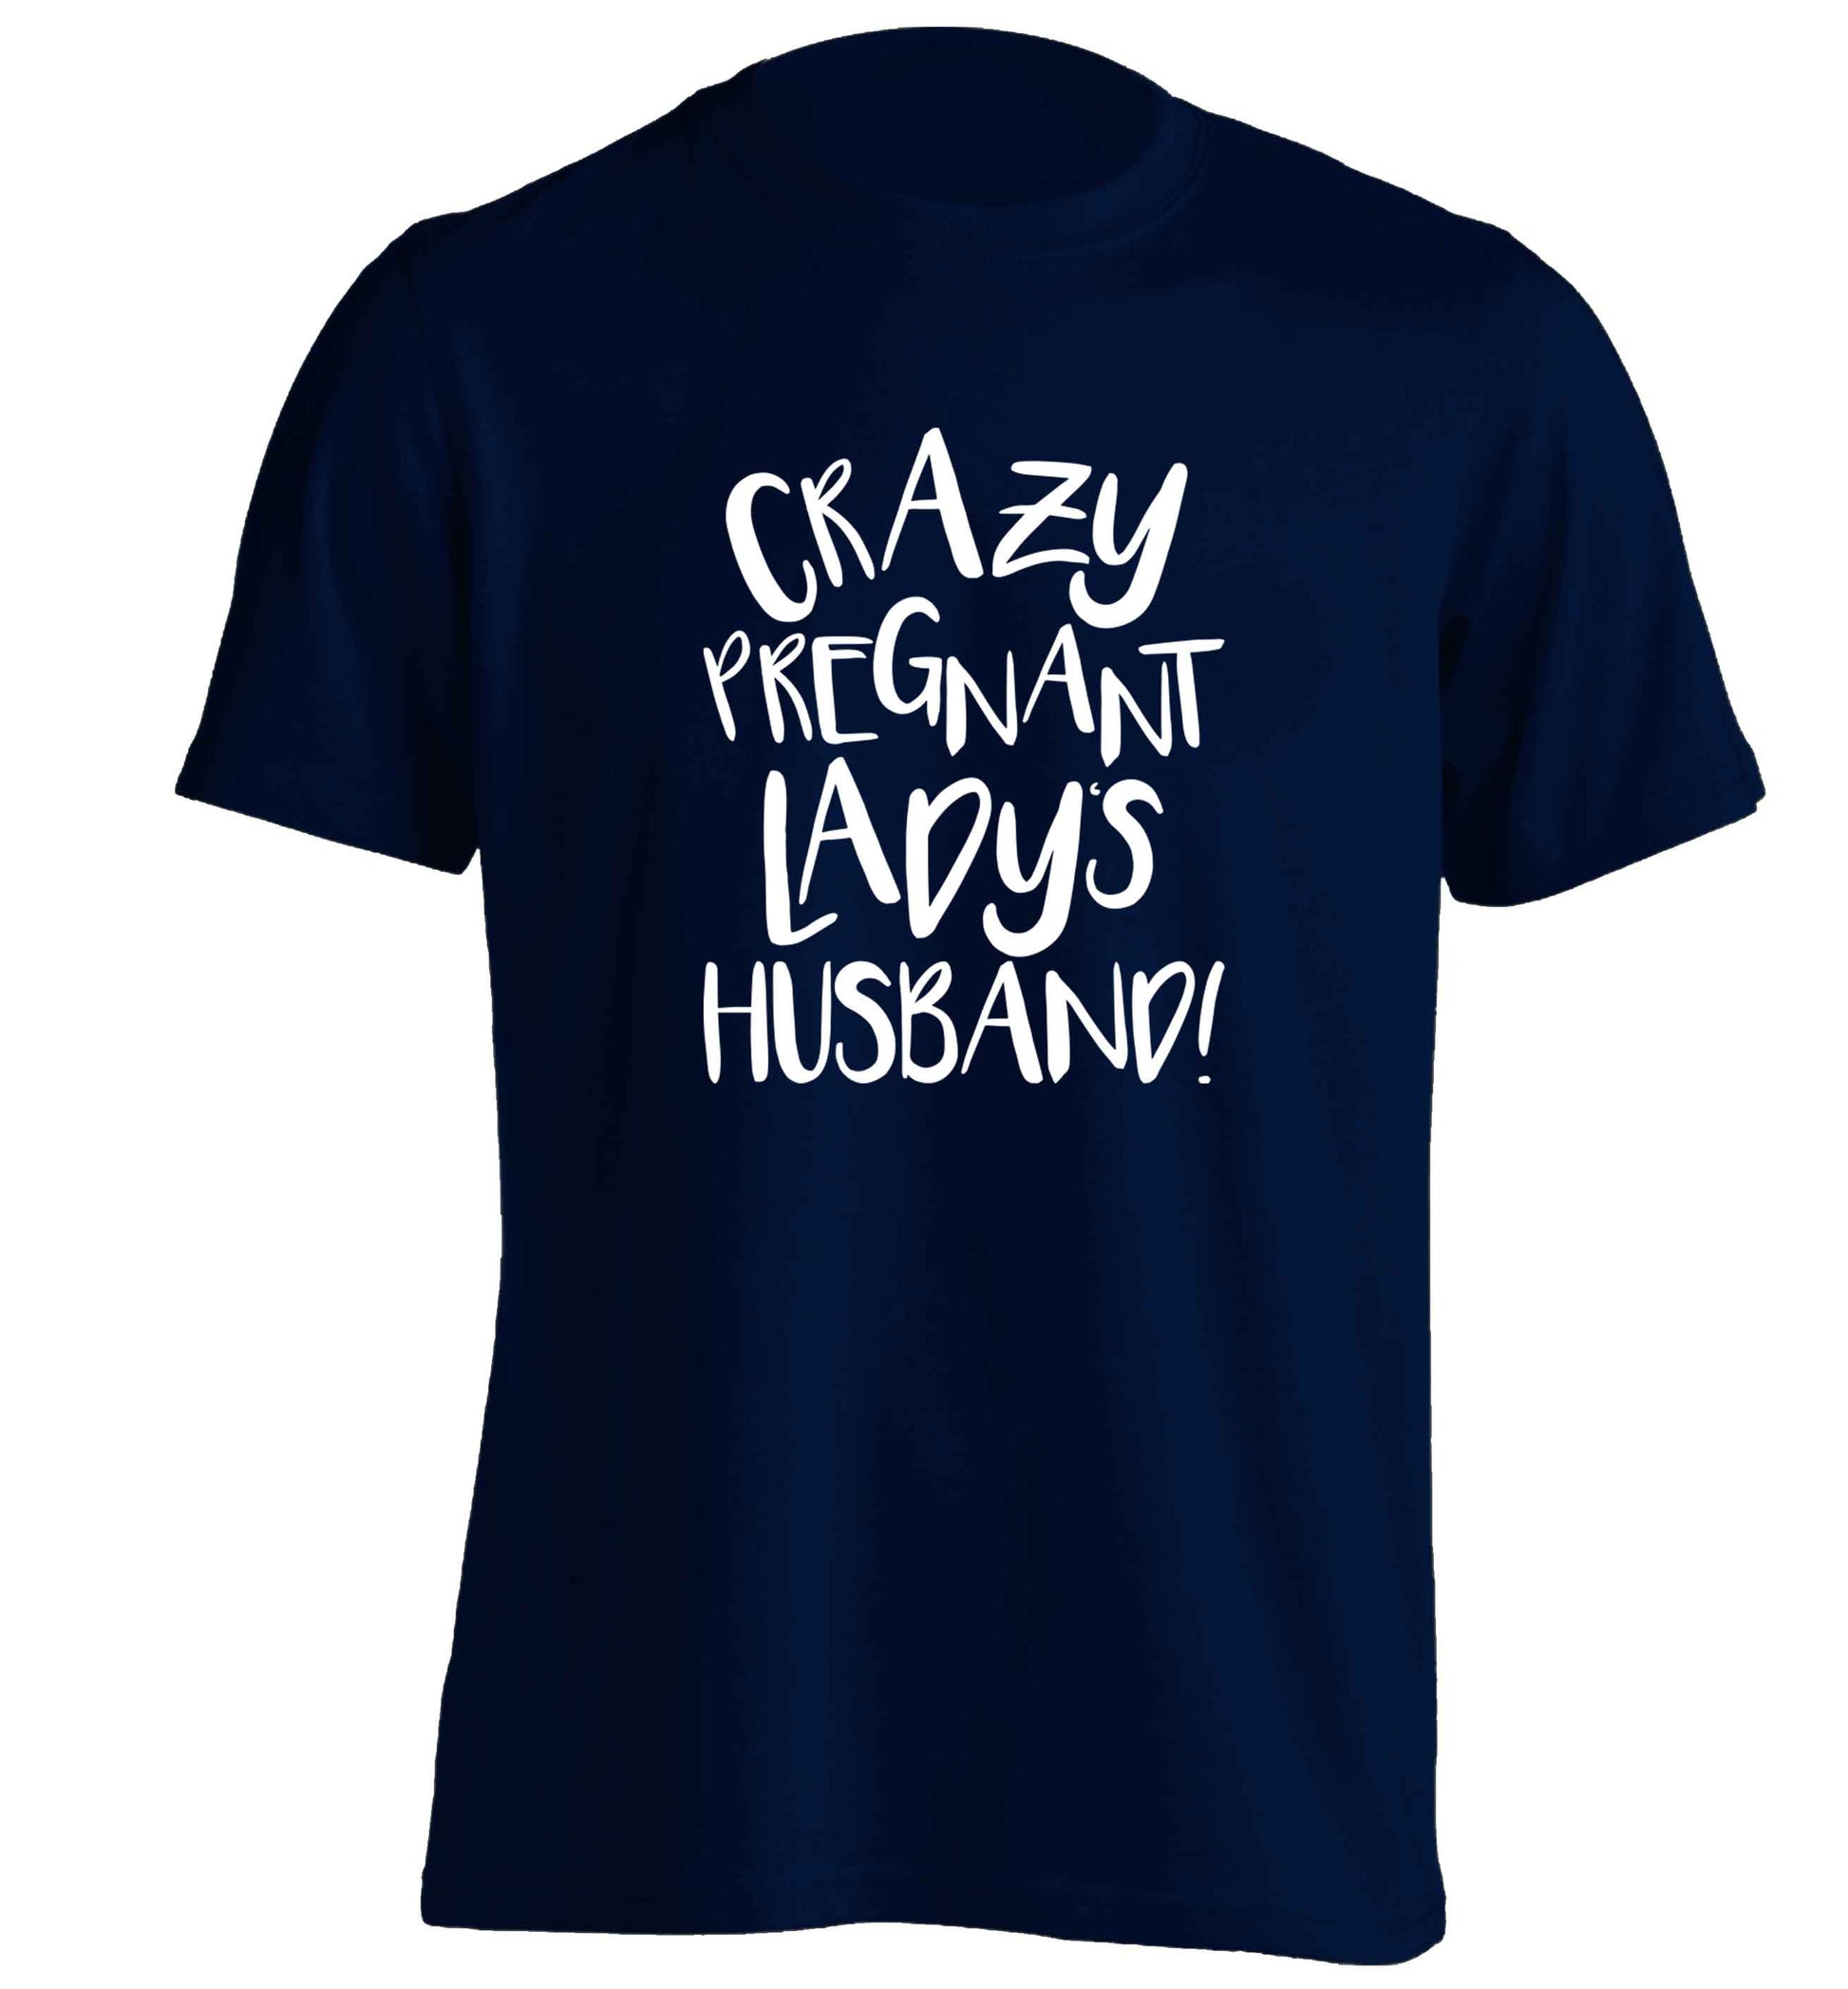 Crazy pregnant lady's husband adults unisex navy Tshirt 2XL